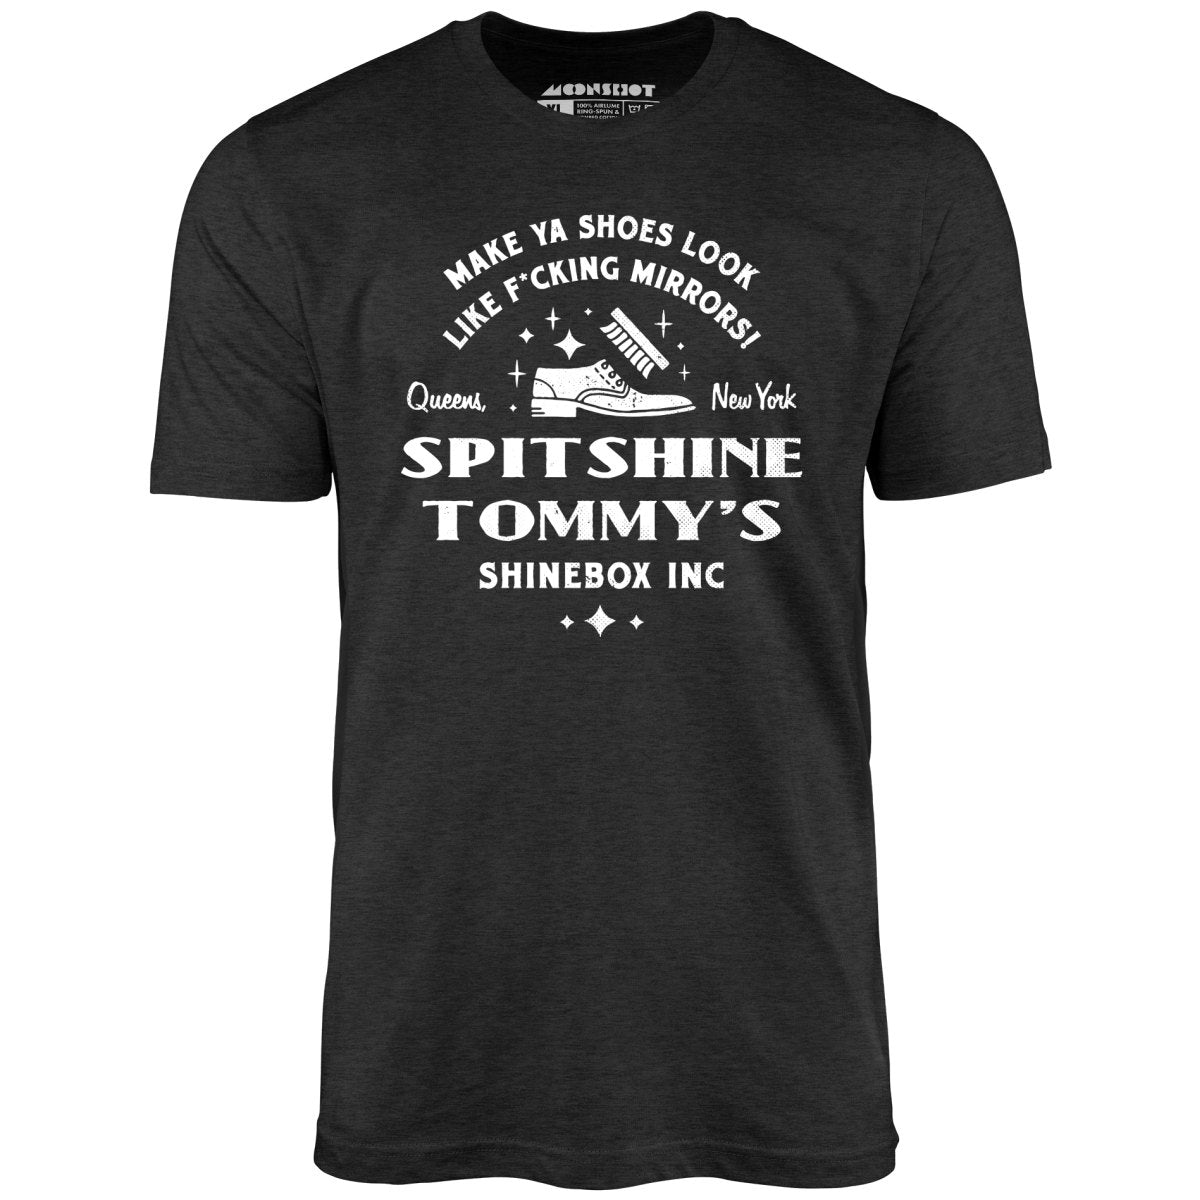 Spitshine Tommy's Shinebox Inc. - Unisex T-Shirt